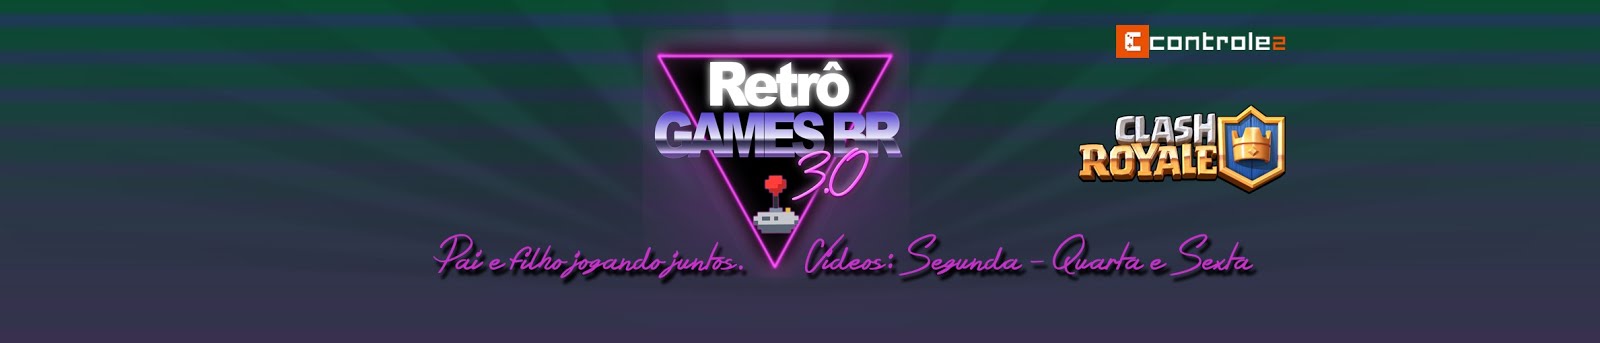 Retro Games BR 3.0